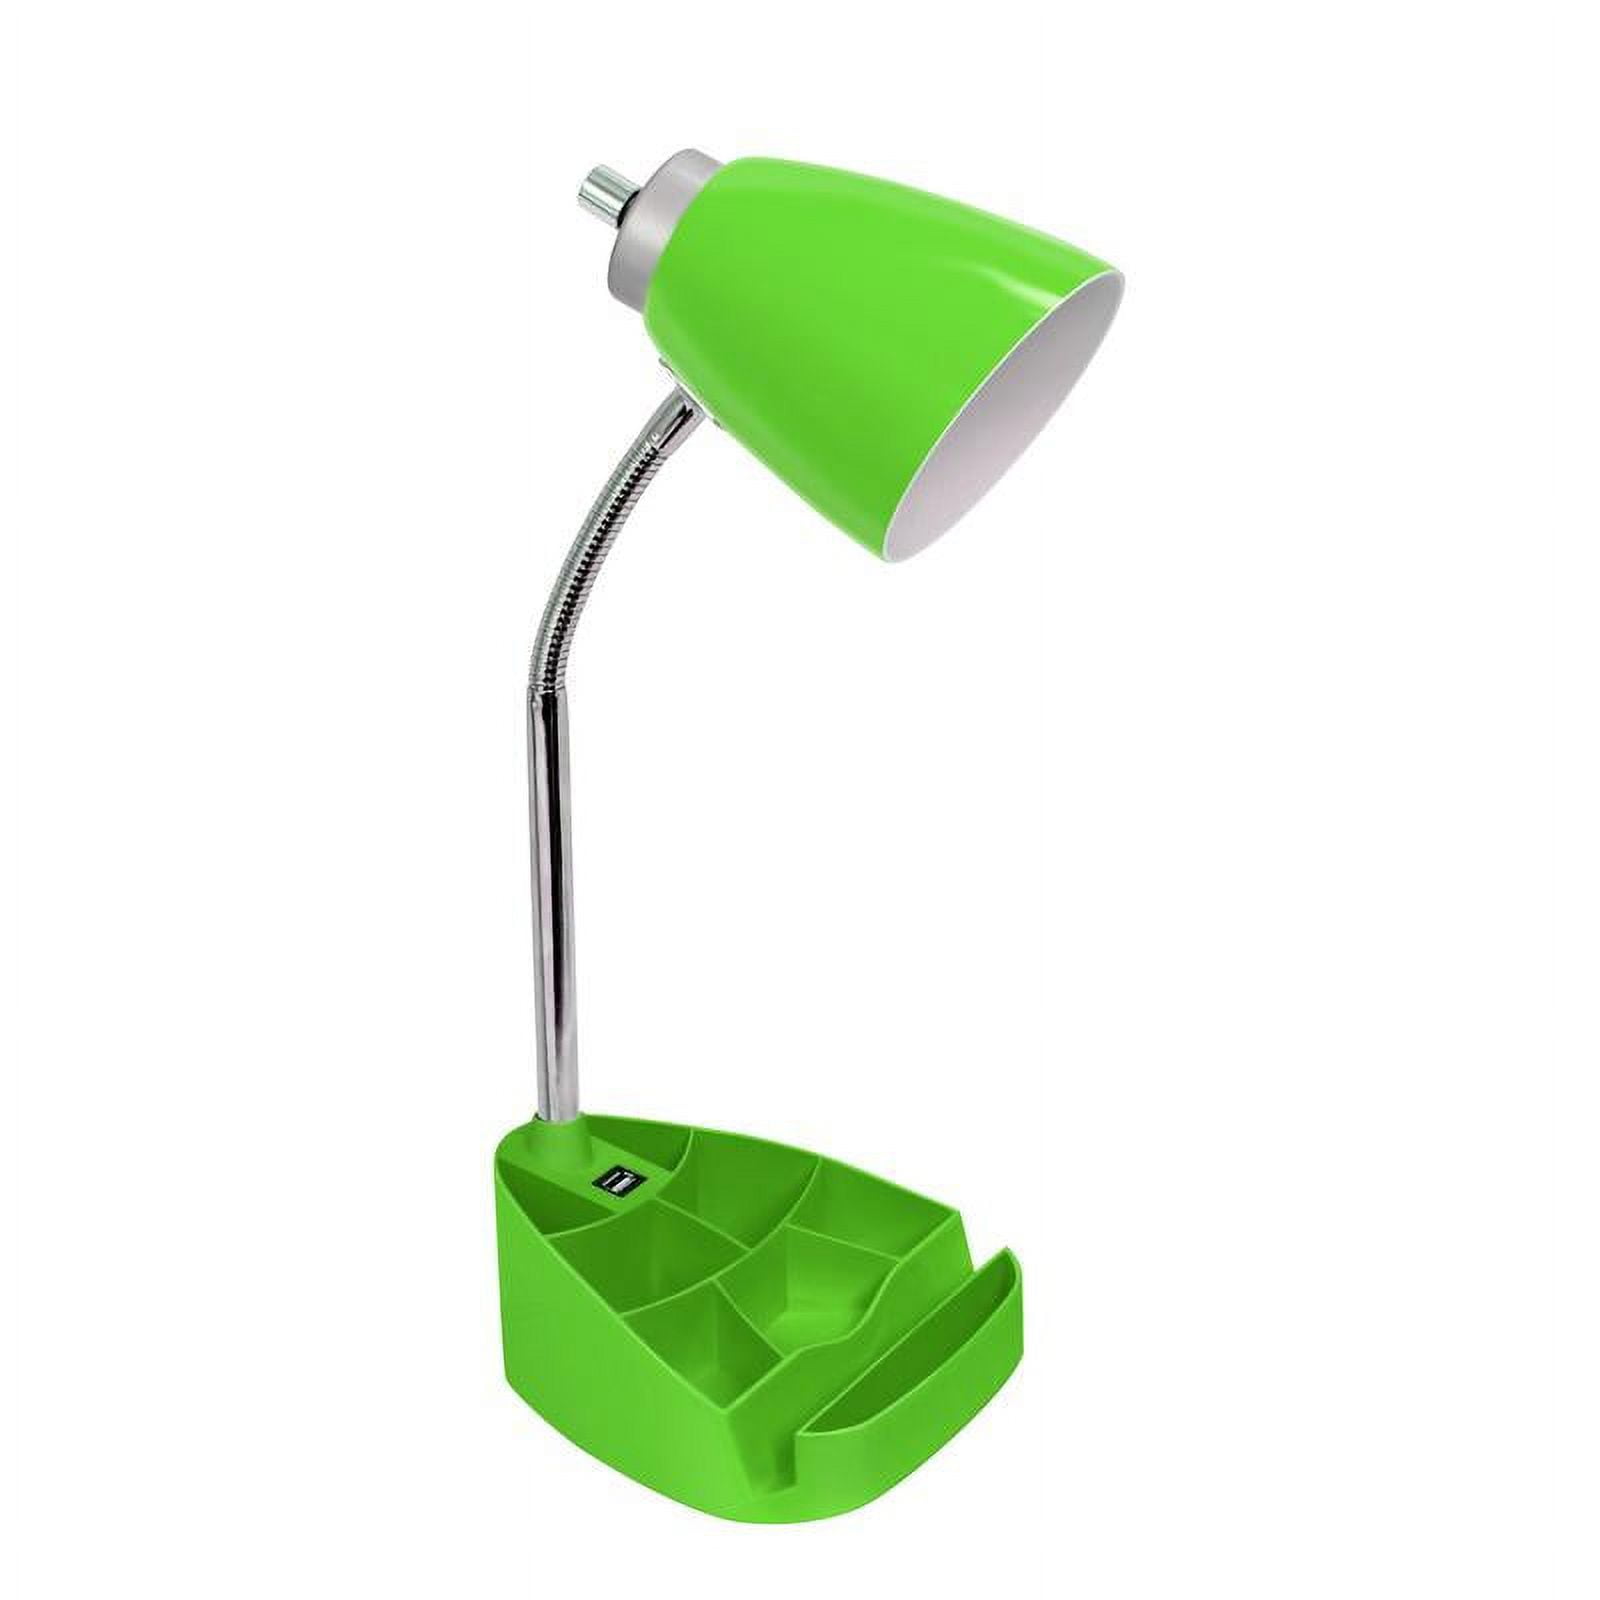 Ld1056-grn Gooseneck Organizer Desk Lamp With Ipad Tablet Stand Book Holder & Usb Port, Green